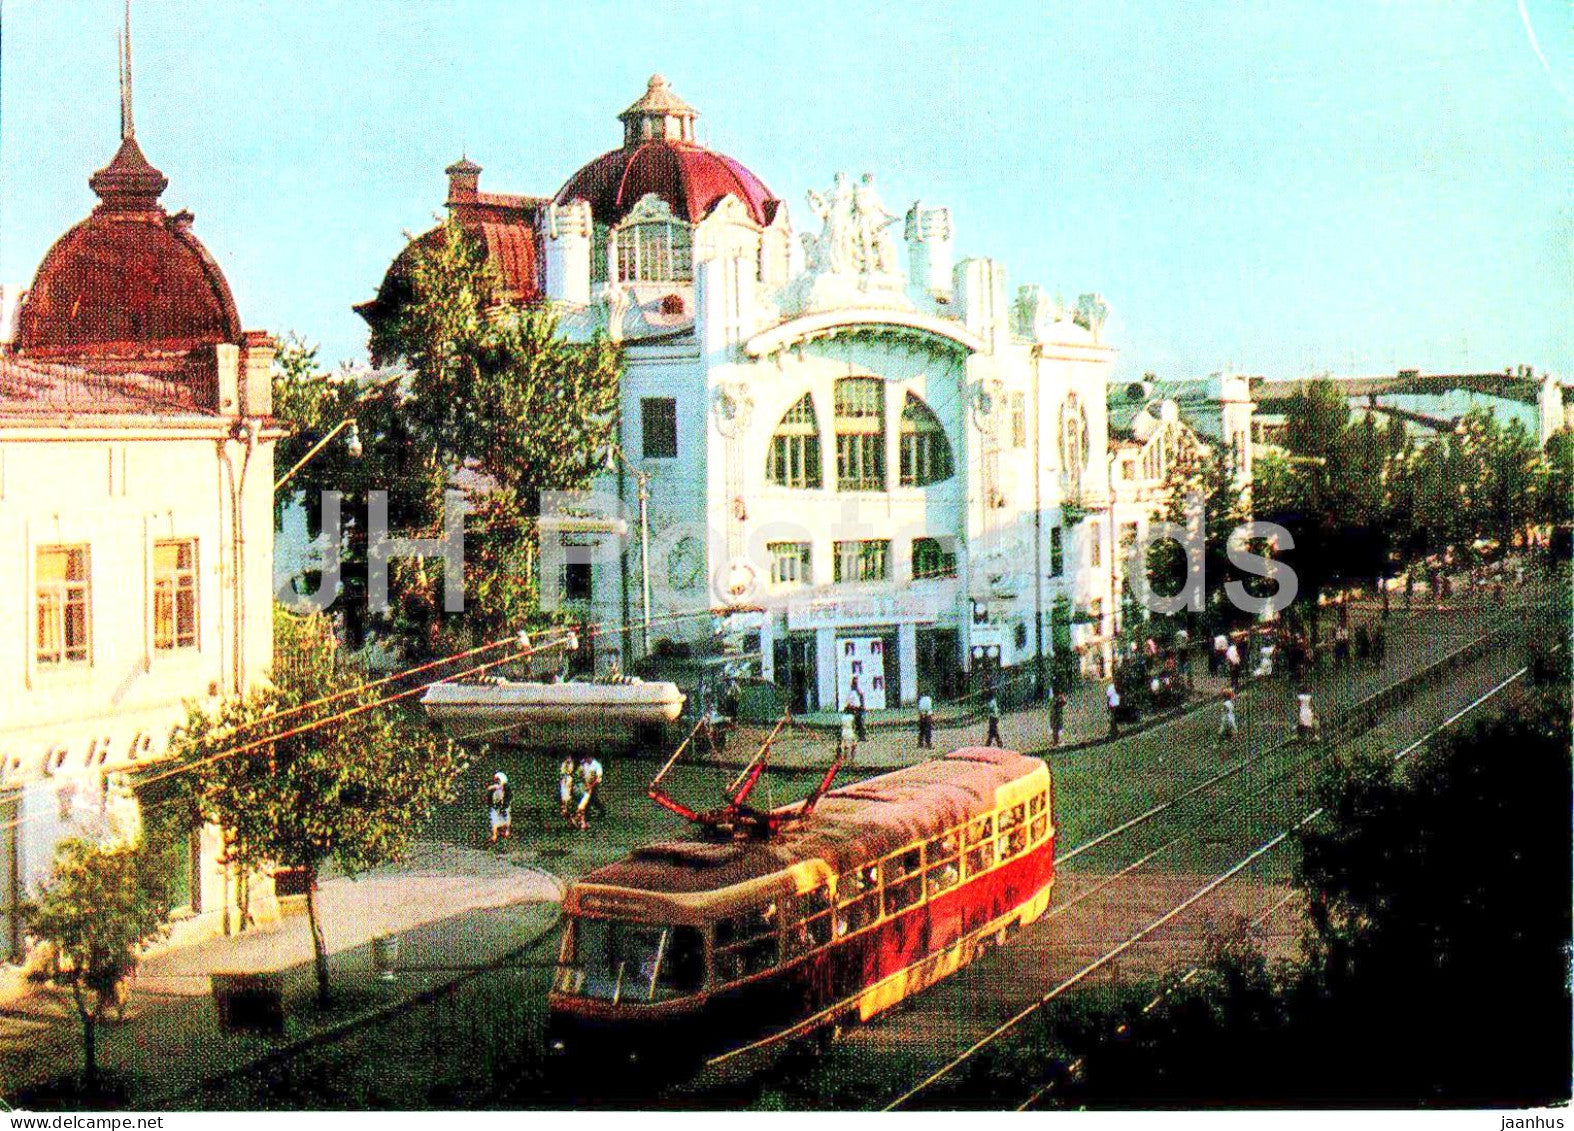 Kuybyshev - Samara - State Philharmonic - tram - postal stationery - 1972 - Russia USSR - unused - JH Postcards